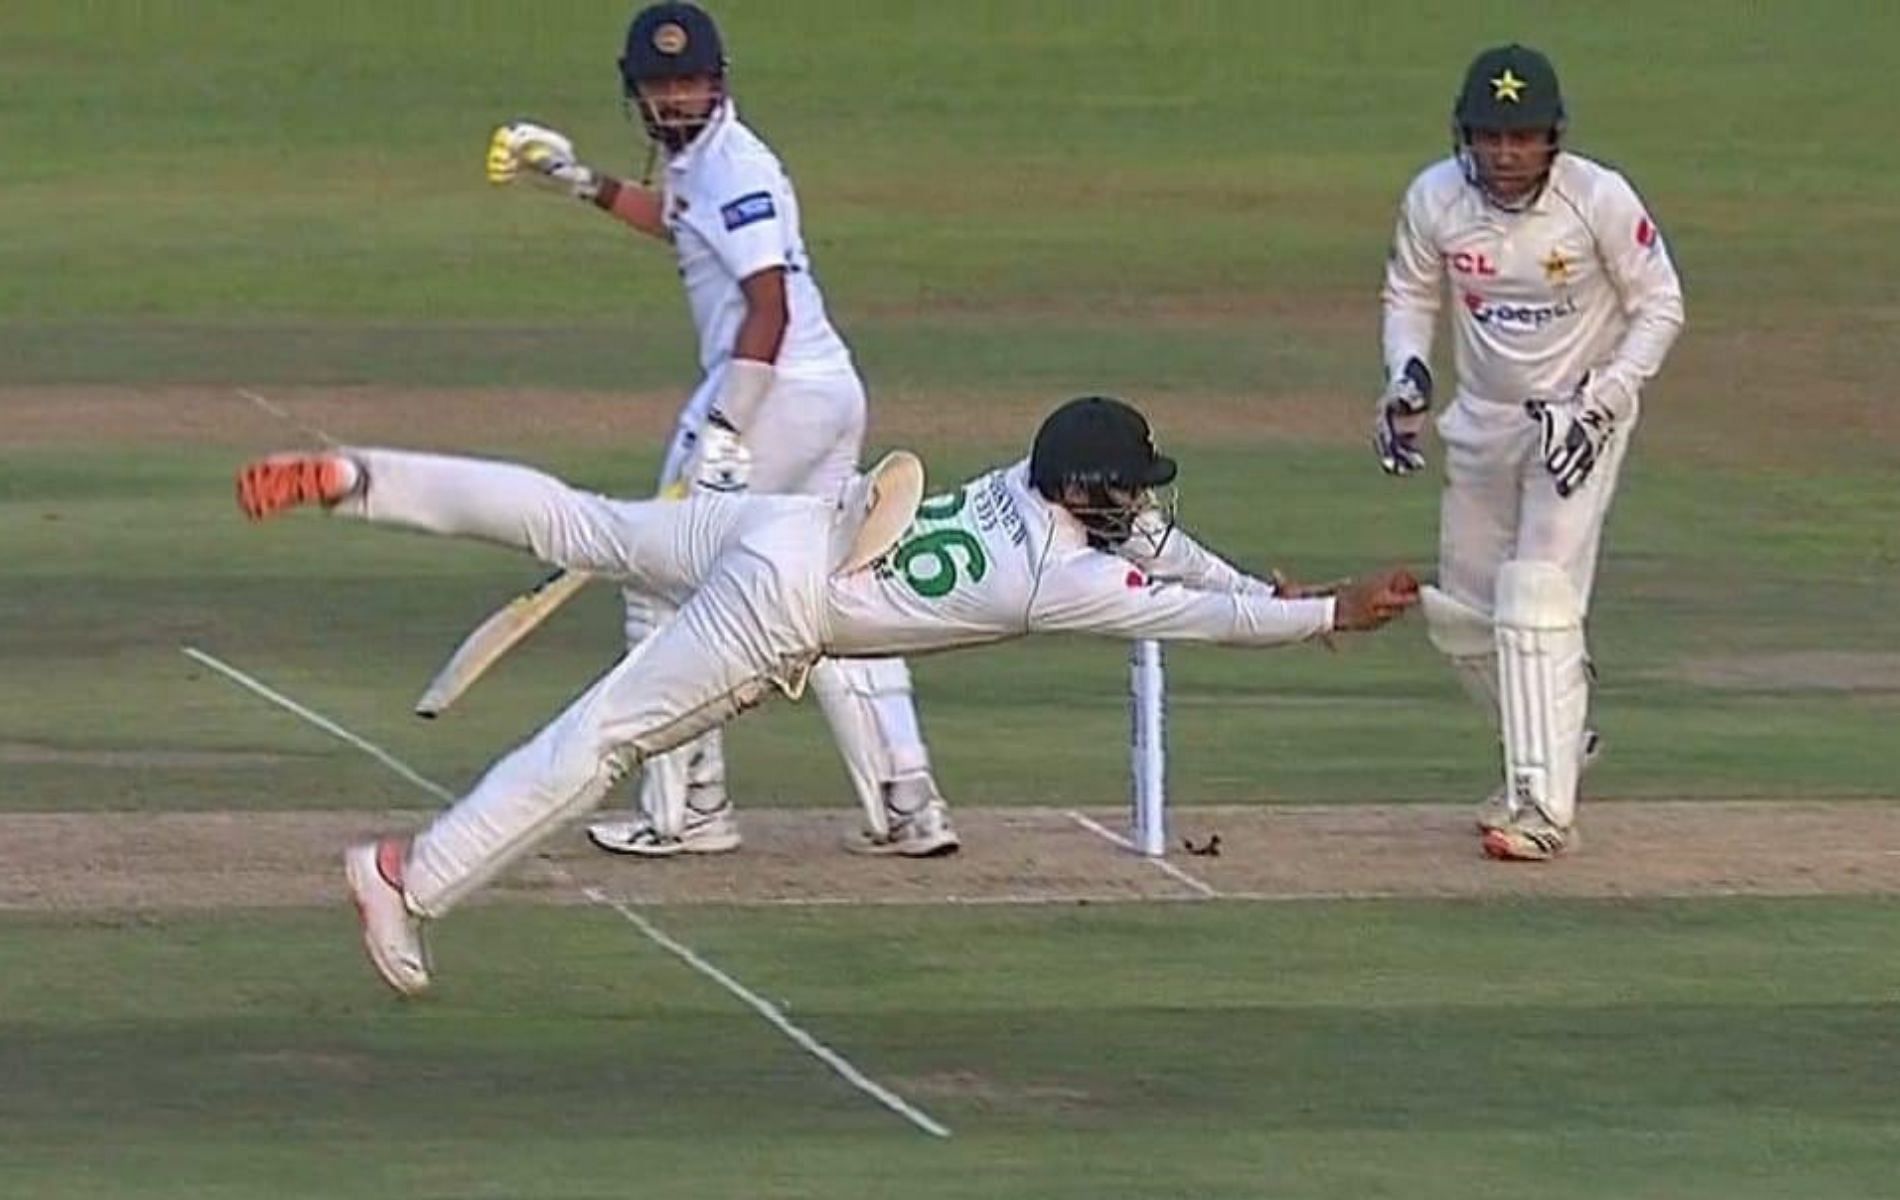 [Watch] Pakistan's Imam-ul-Haq plucks one-handed blinder at short leg in 1st Test vs Sri Lanka